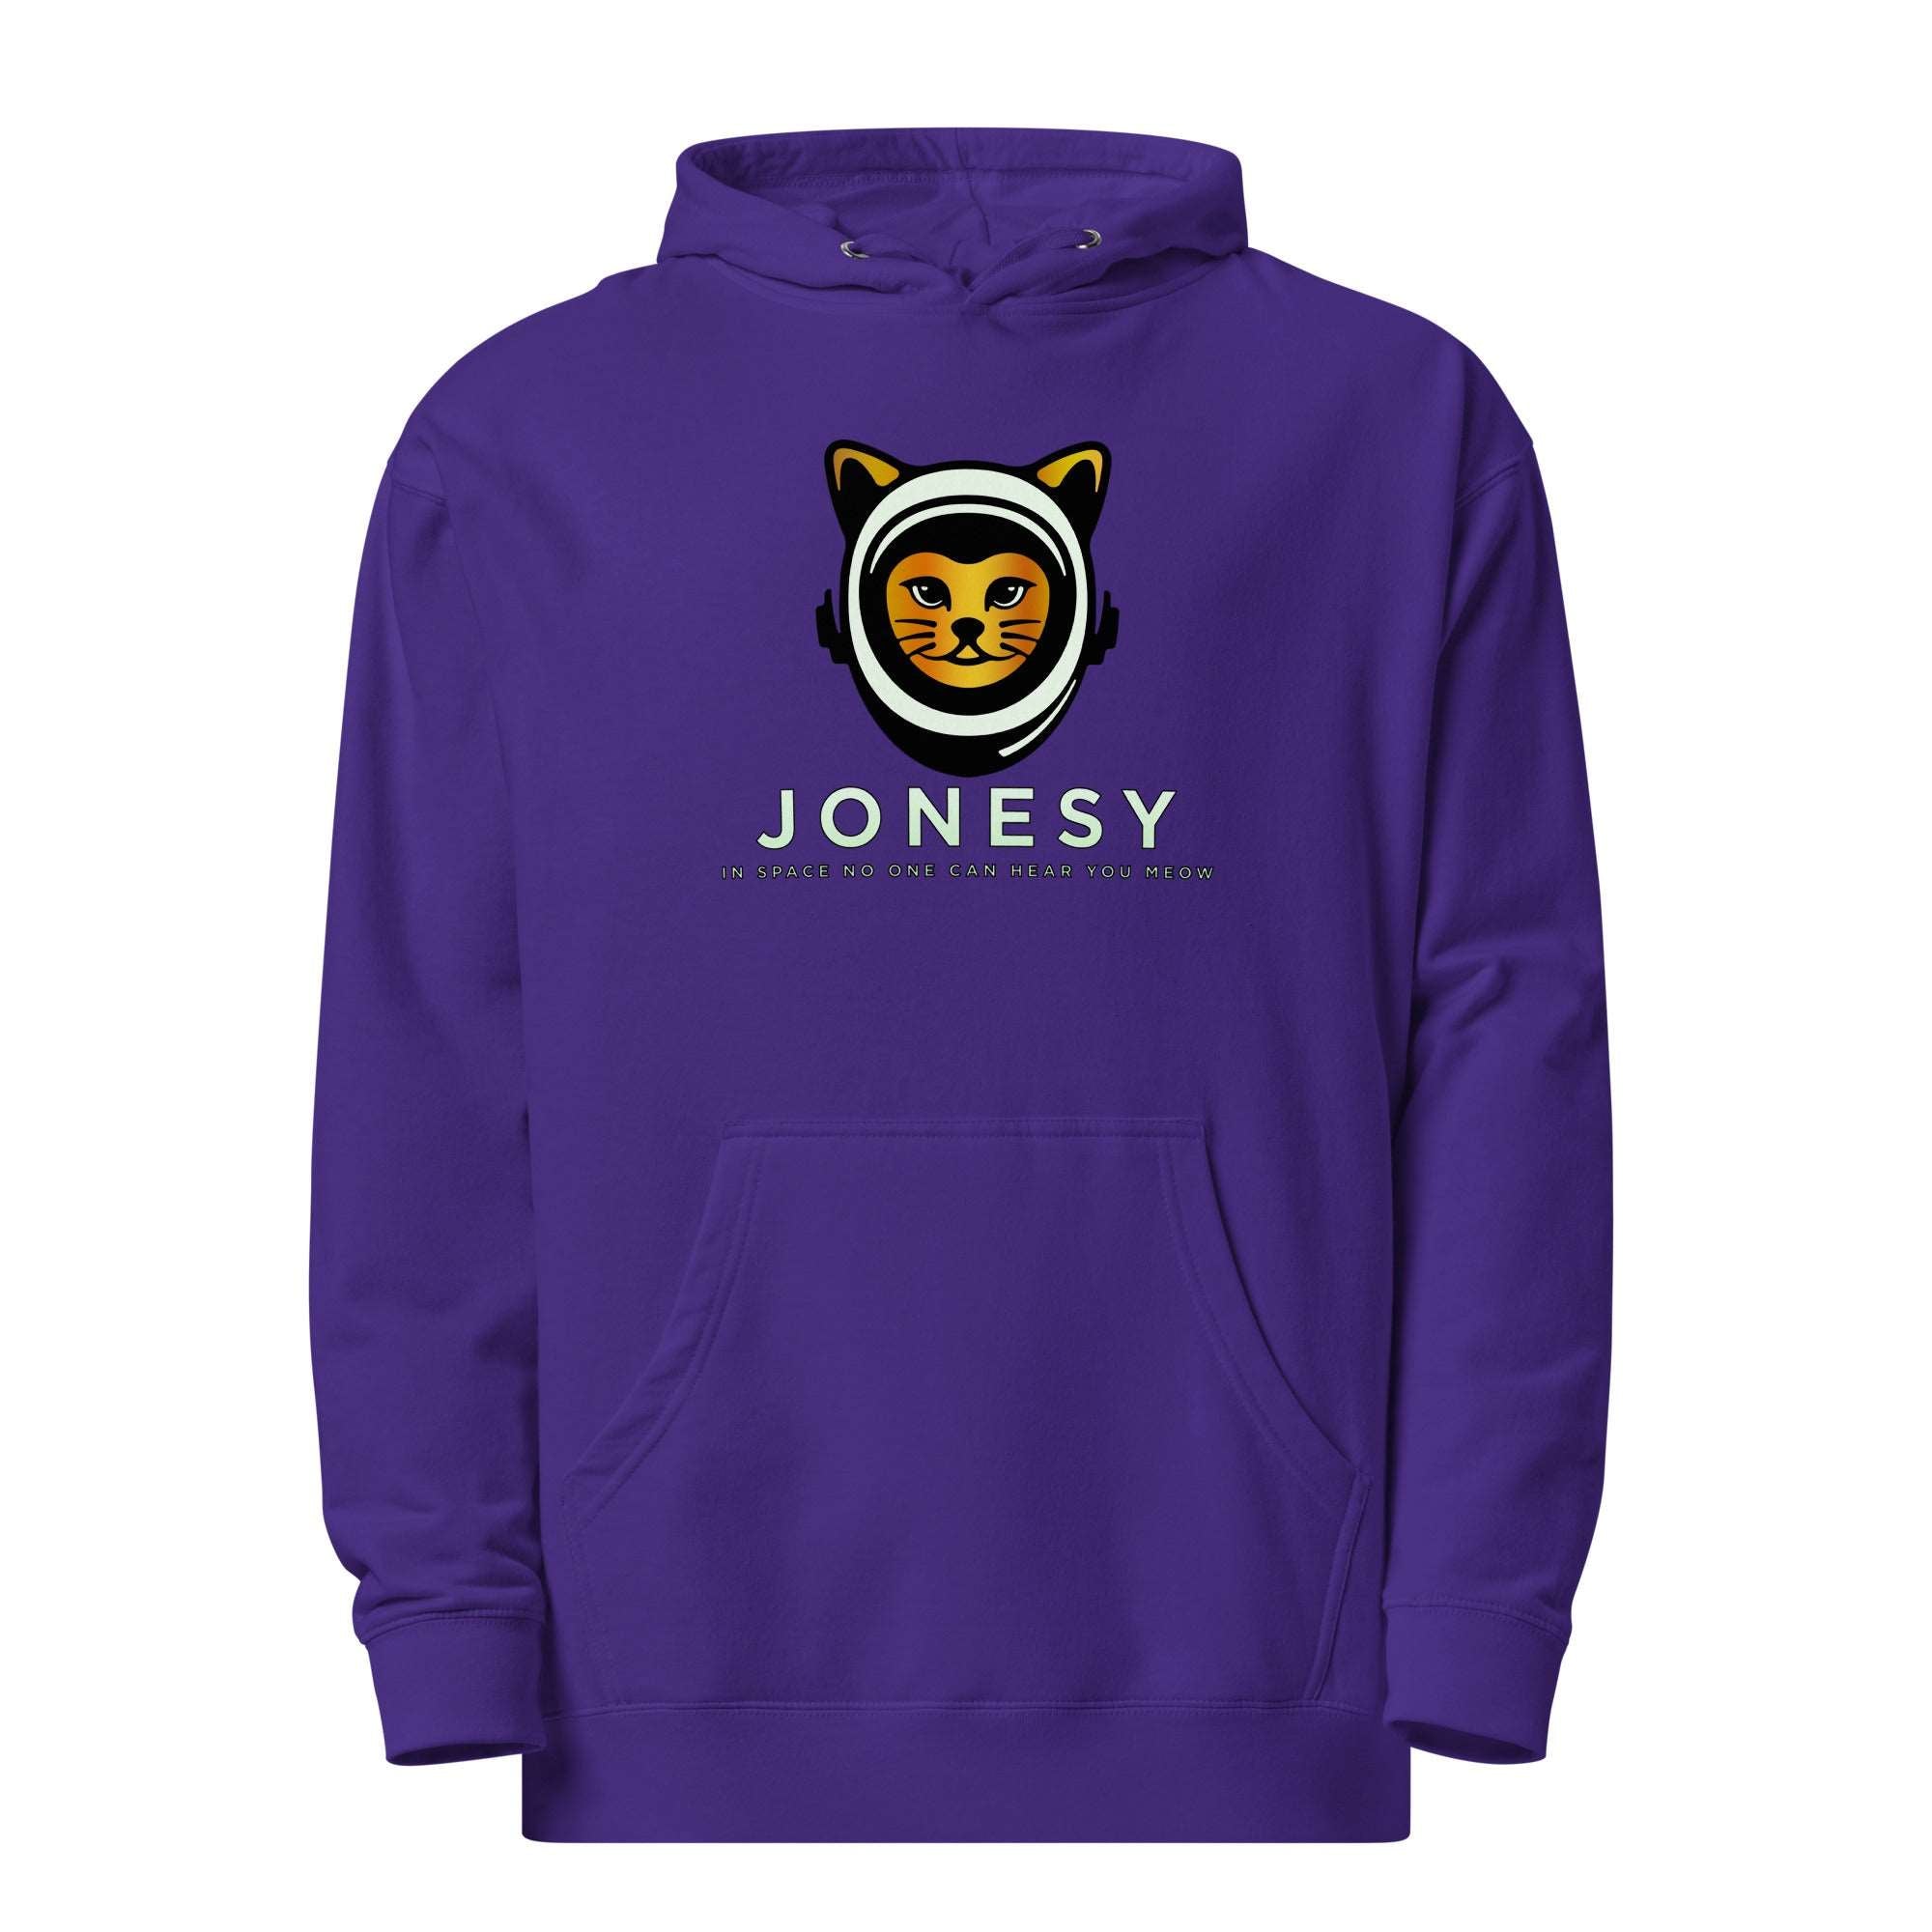 Jonesy Unisex midweight hoodie